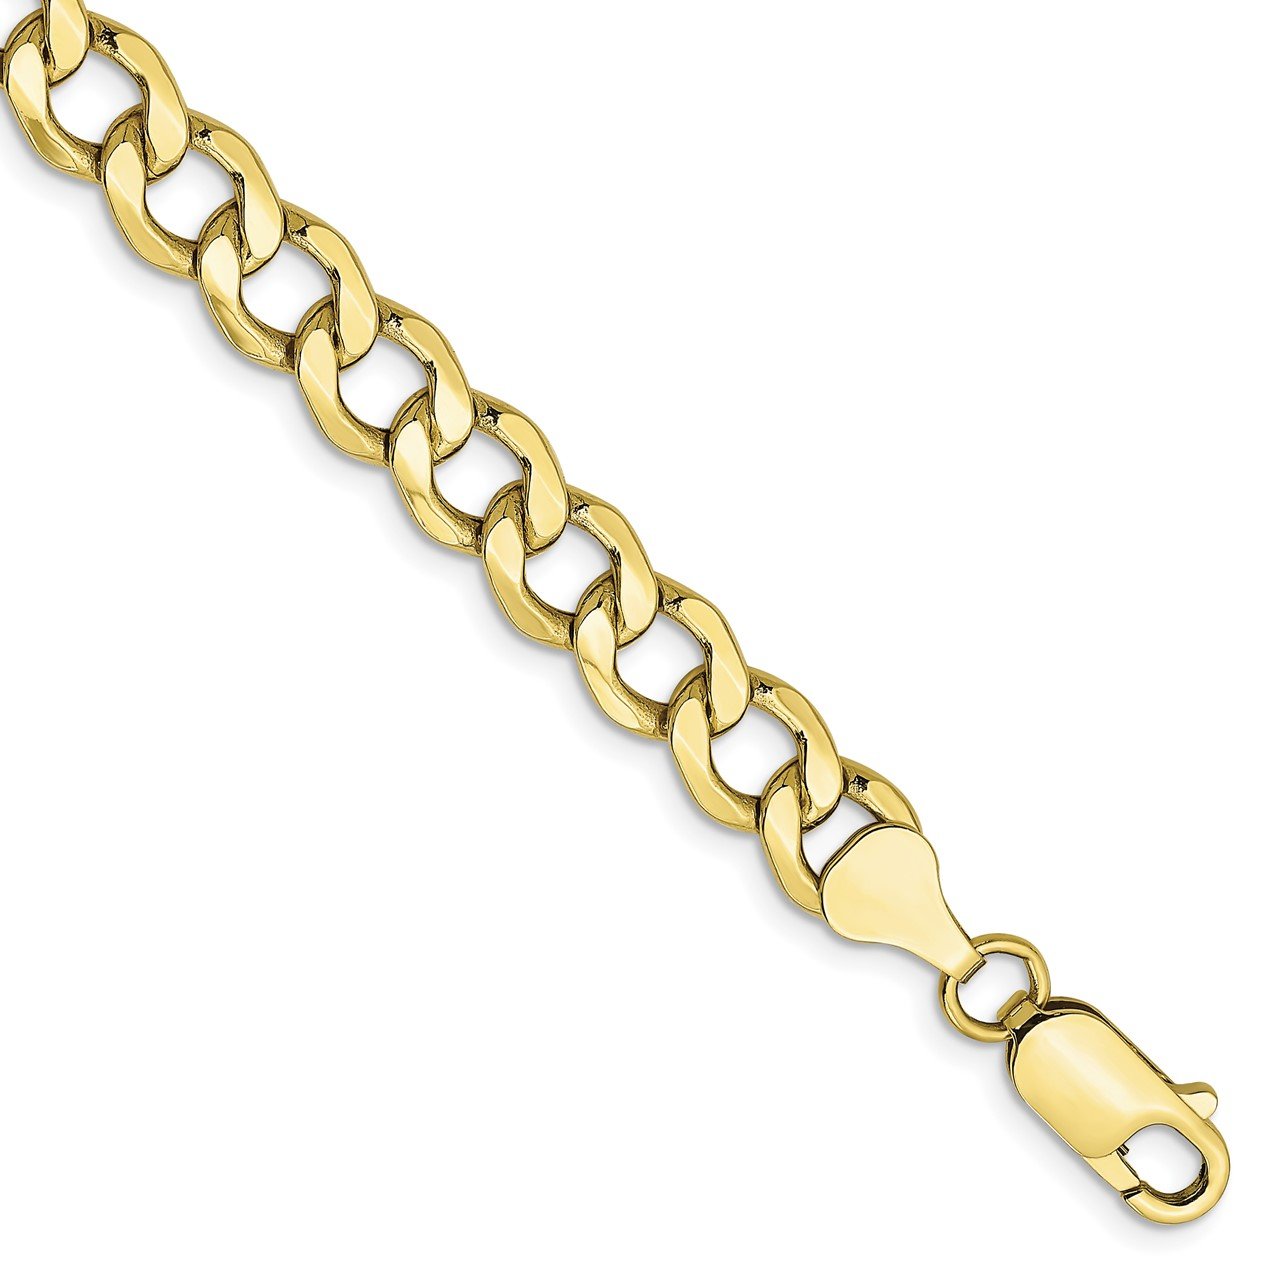 10k 7.0mm Semi-Solid Curb Link Chain